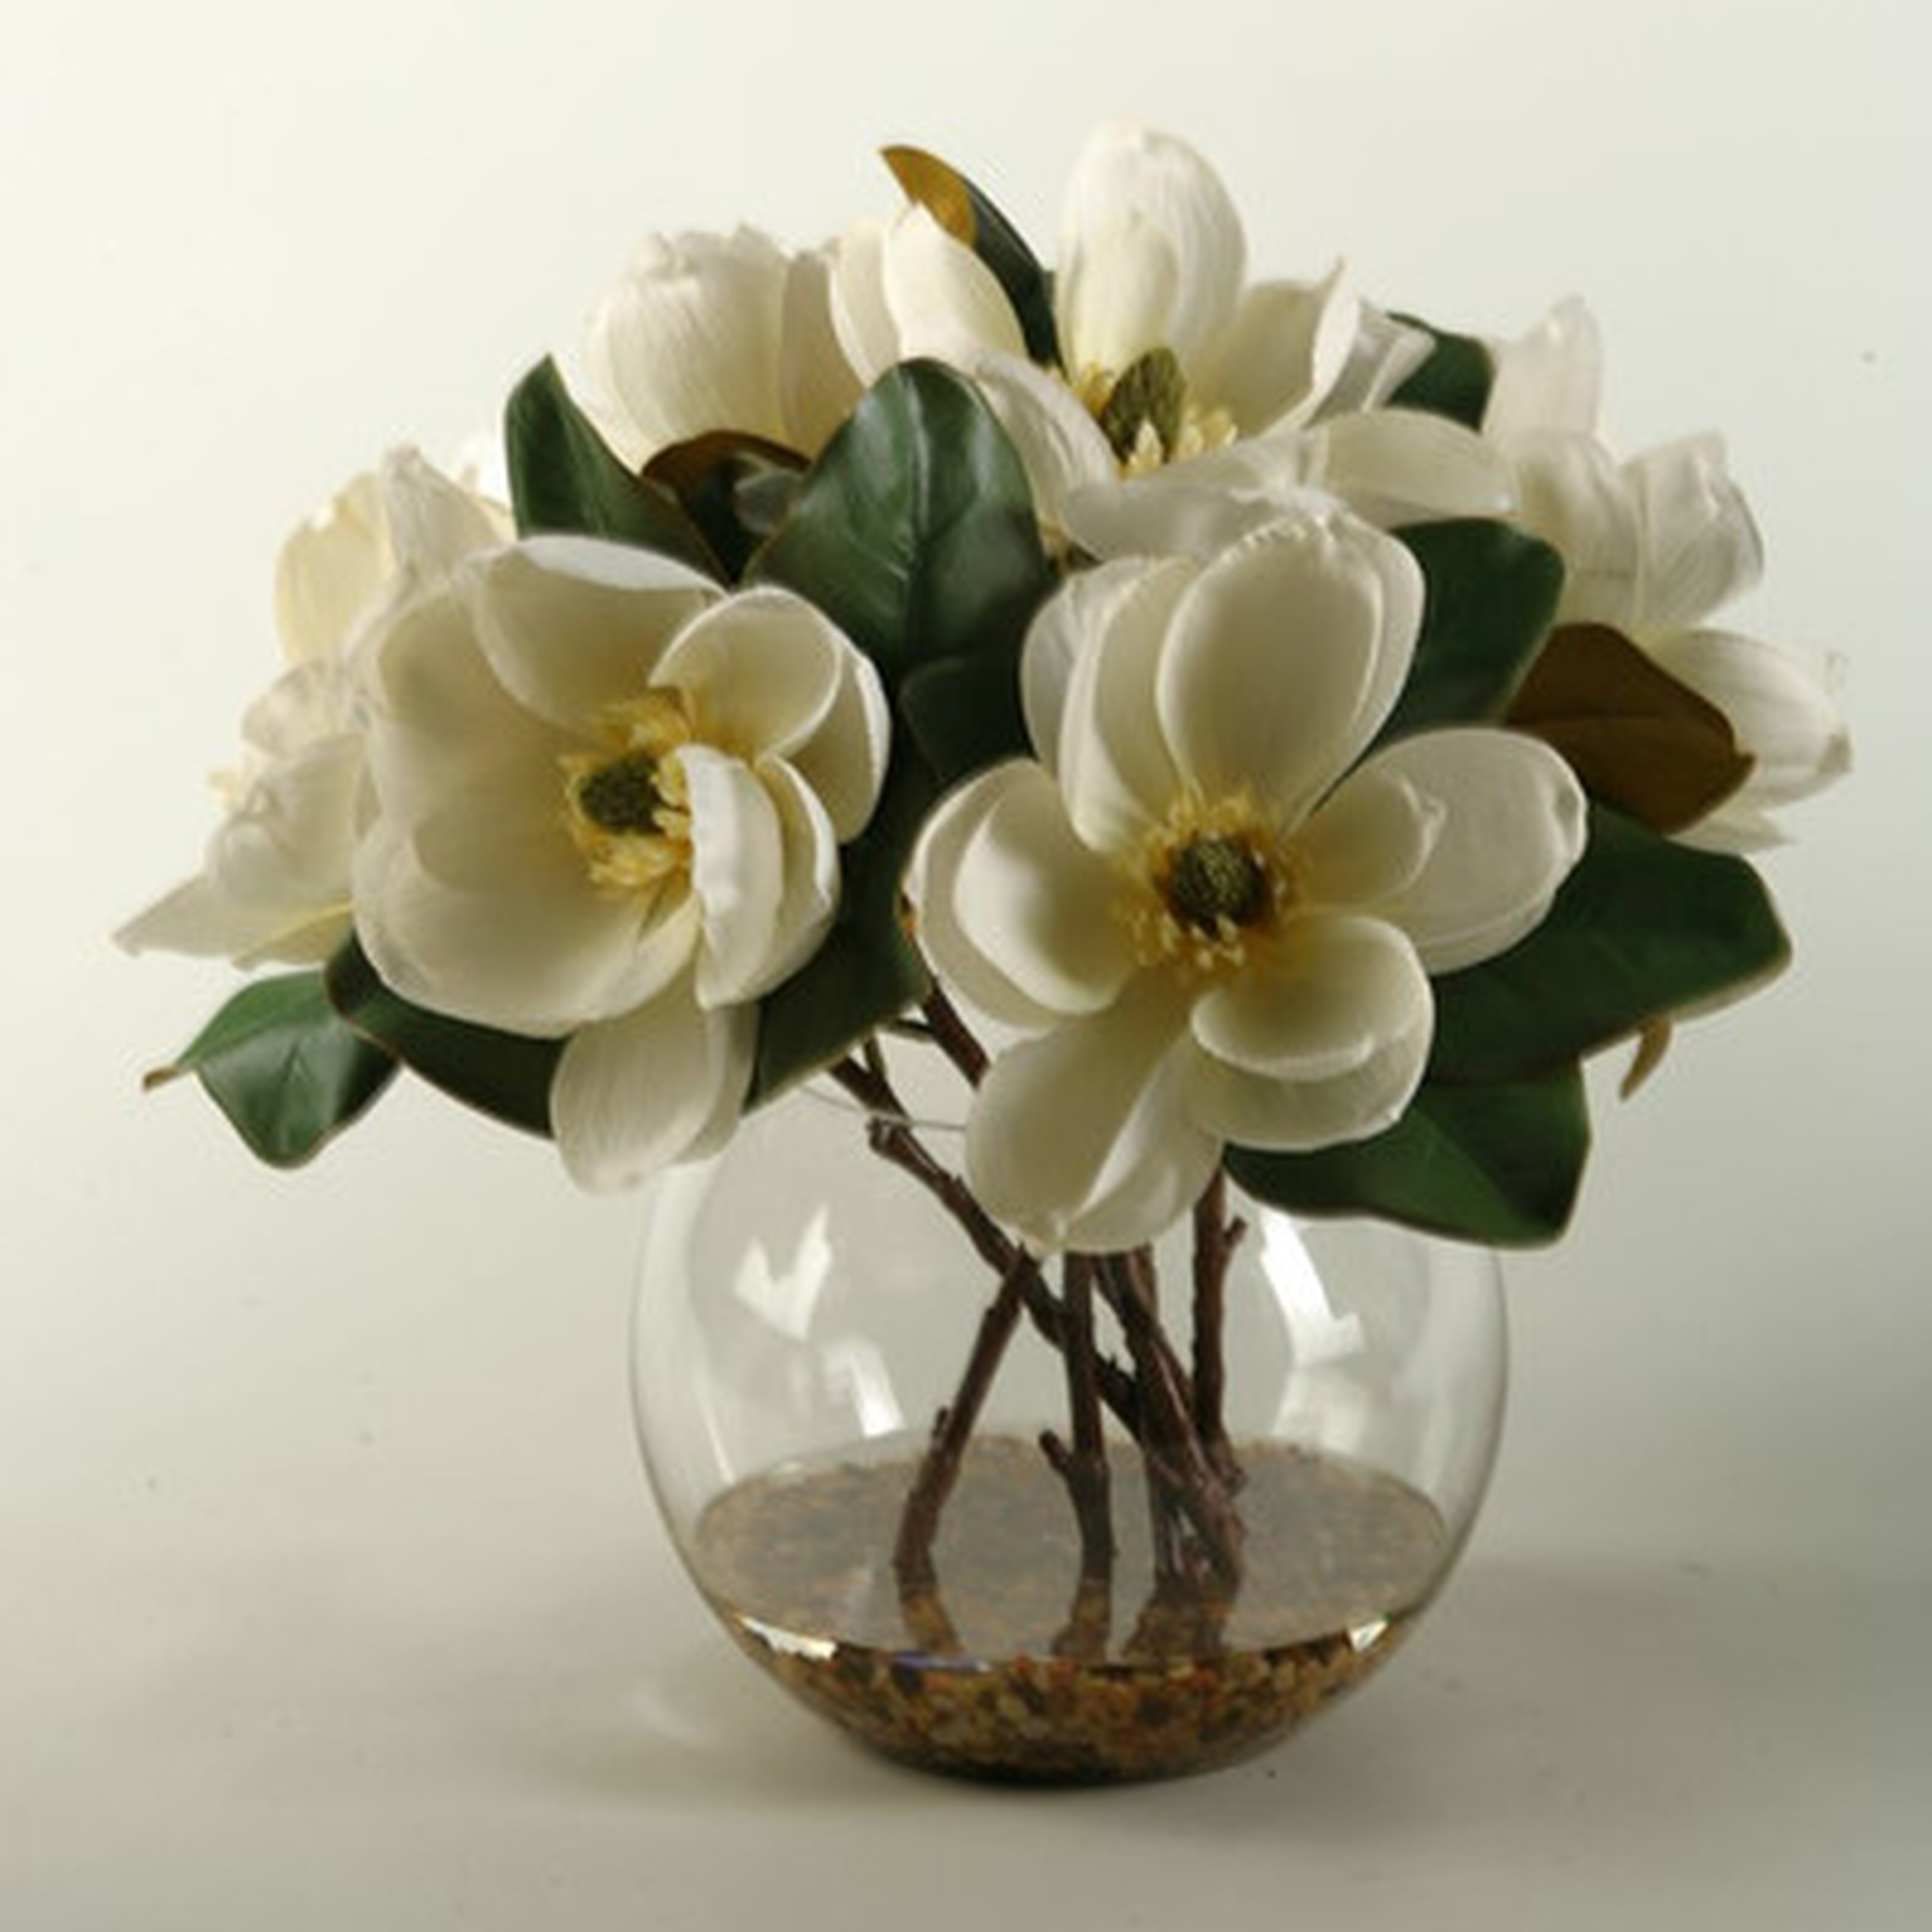 Magnolias Centerpiece in Glass Bubble Bowl - Birch Lane